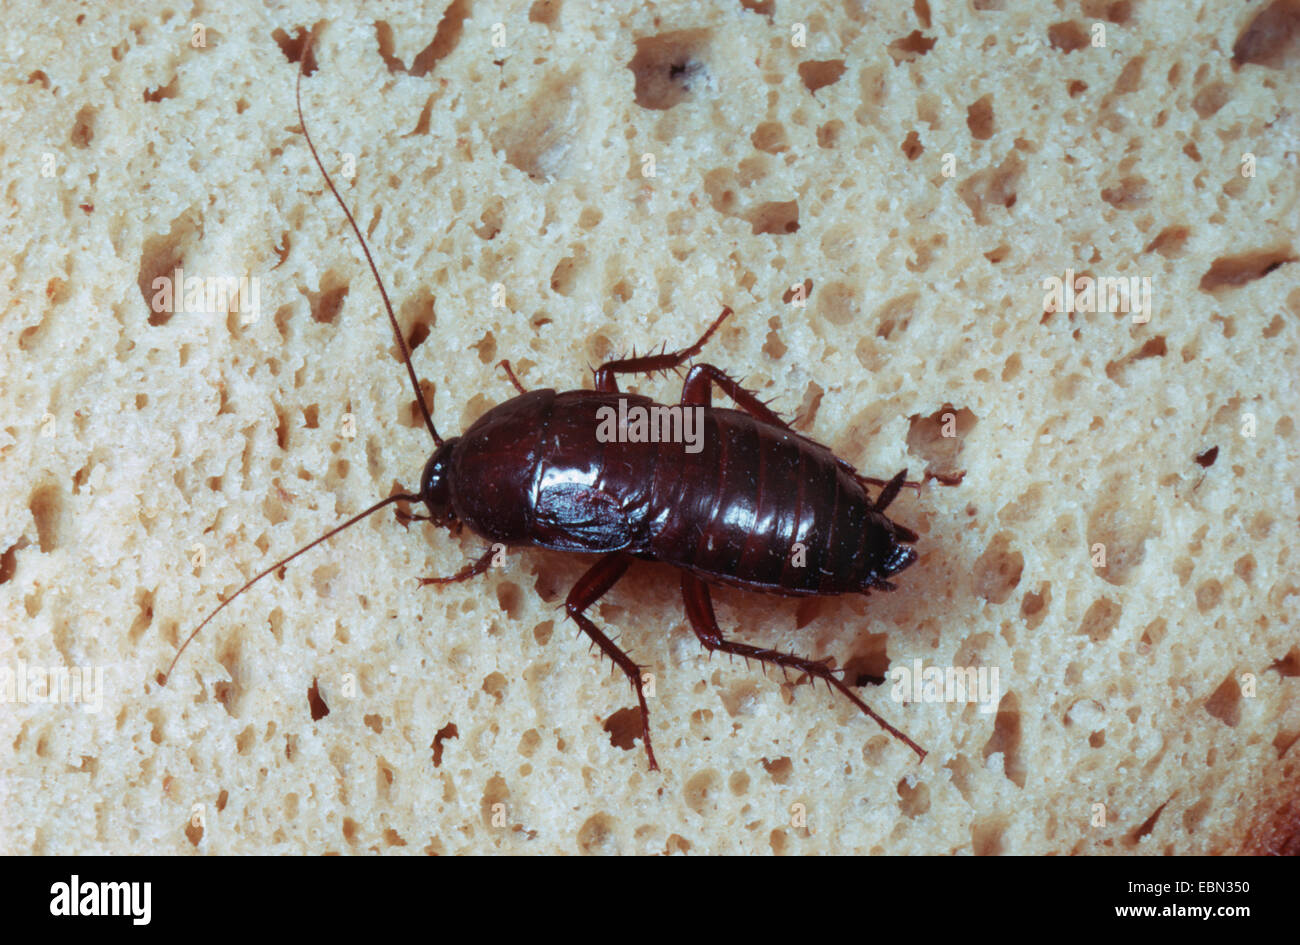 Oriental cockroach, common cockroach (Blatta orientalis), sitting on a bread slice Stock Photo